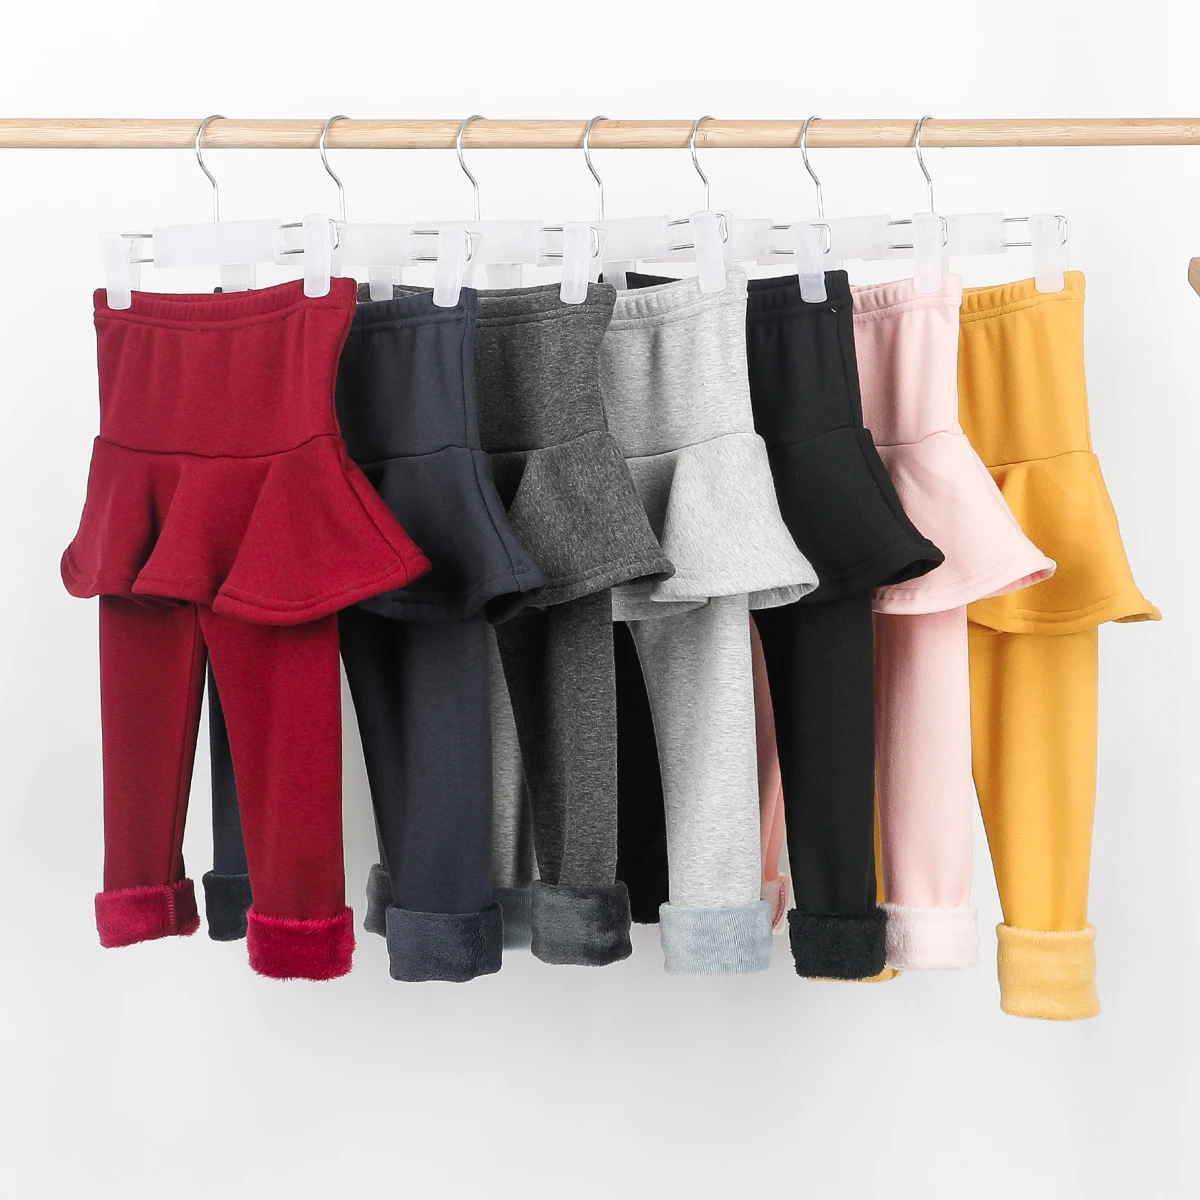 2021 Winter Baby Girls Leggings Children Thick Warm Pants Kids Clothing Autumn Cotton Leggings Girl Skirt-Pants High Quality